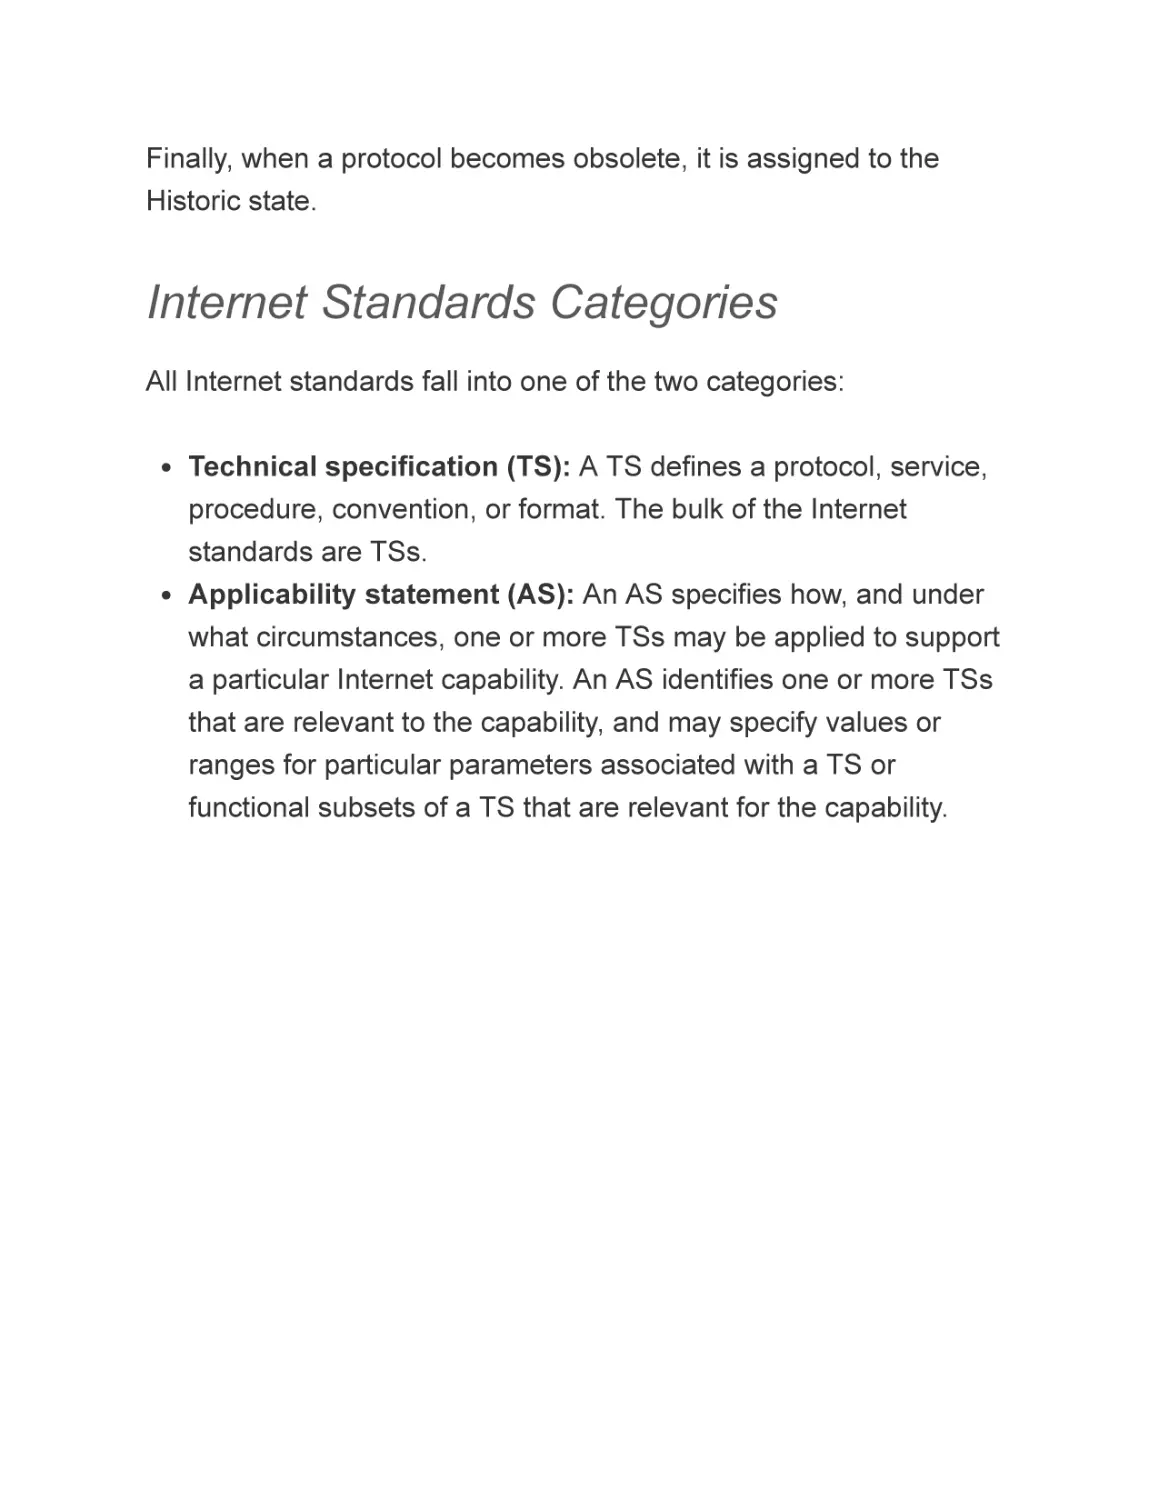 Internet Standards Categories